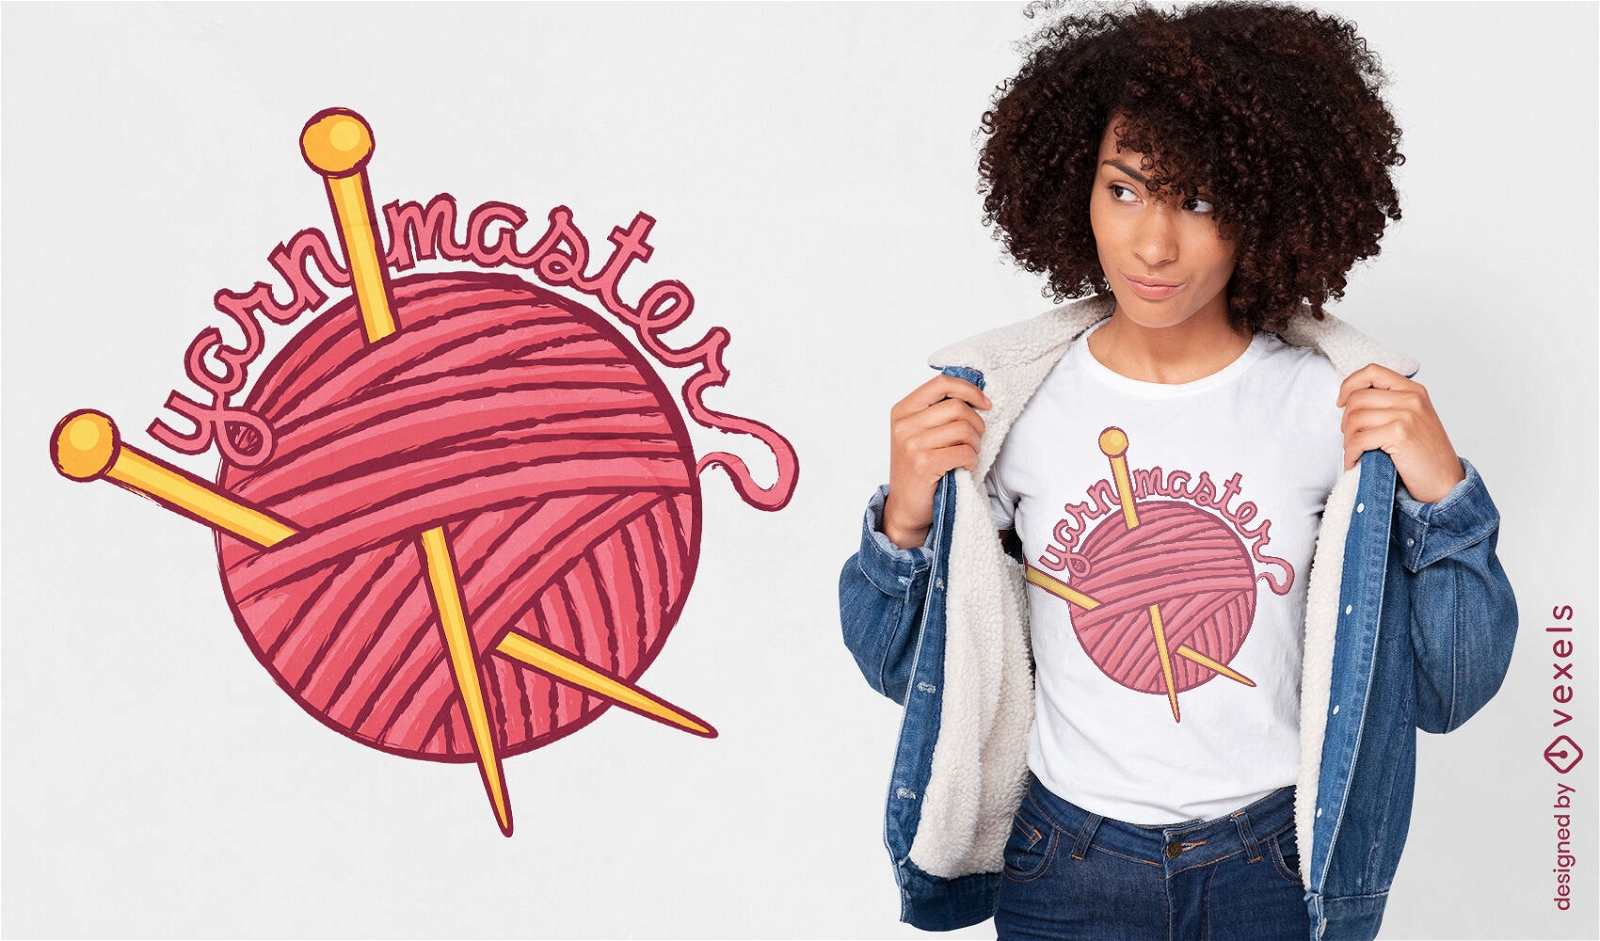 Yarn ball knitting hobby t-shirt design